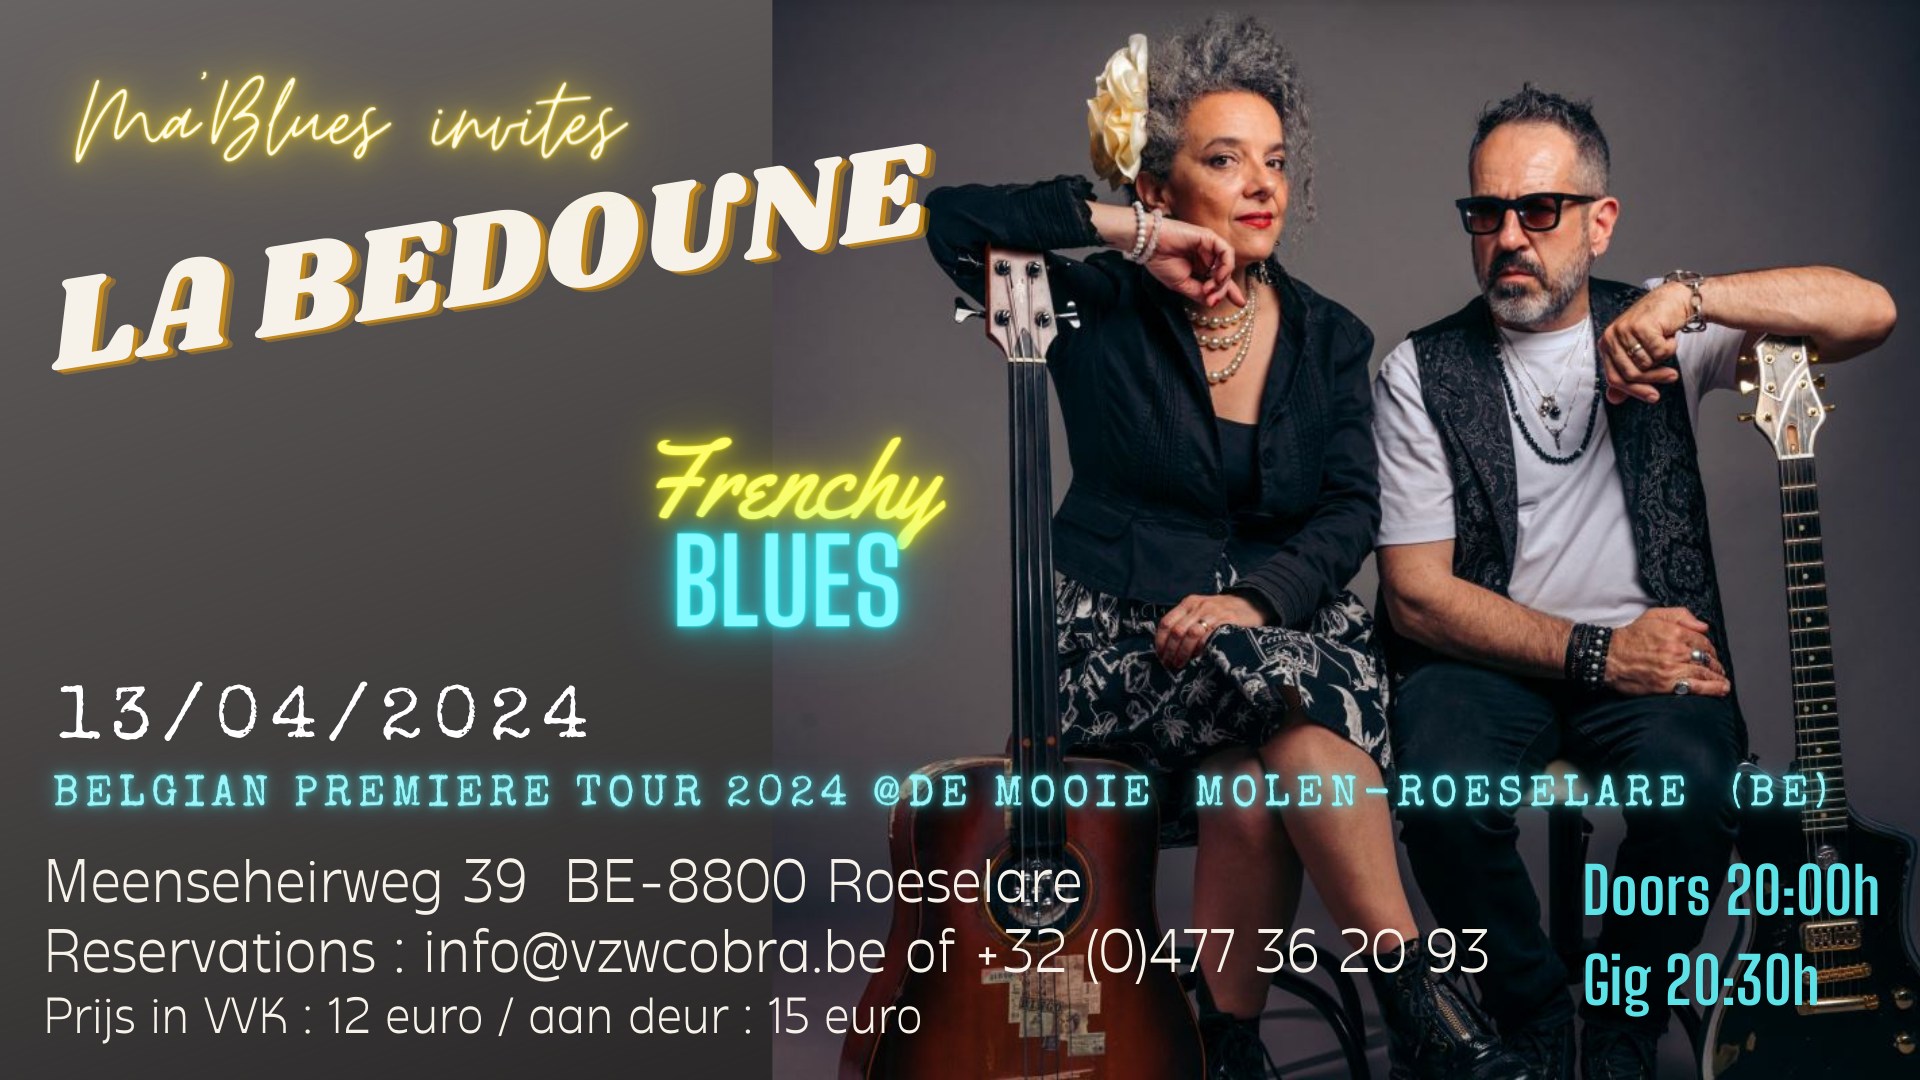 La Bedoune (Frenchy Blues)